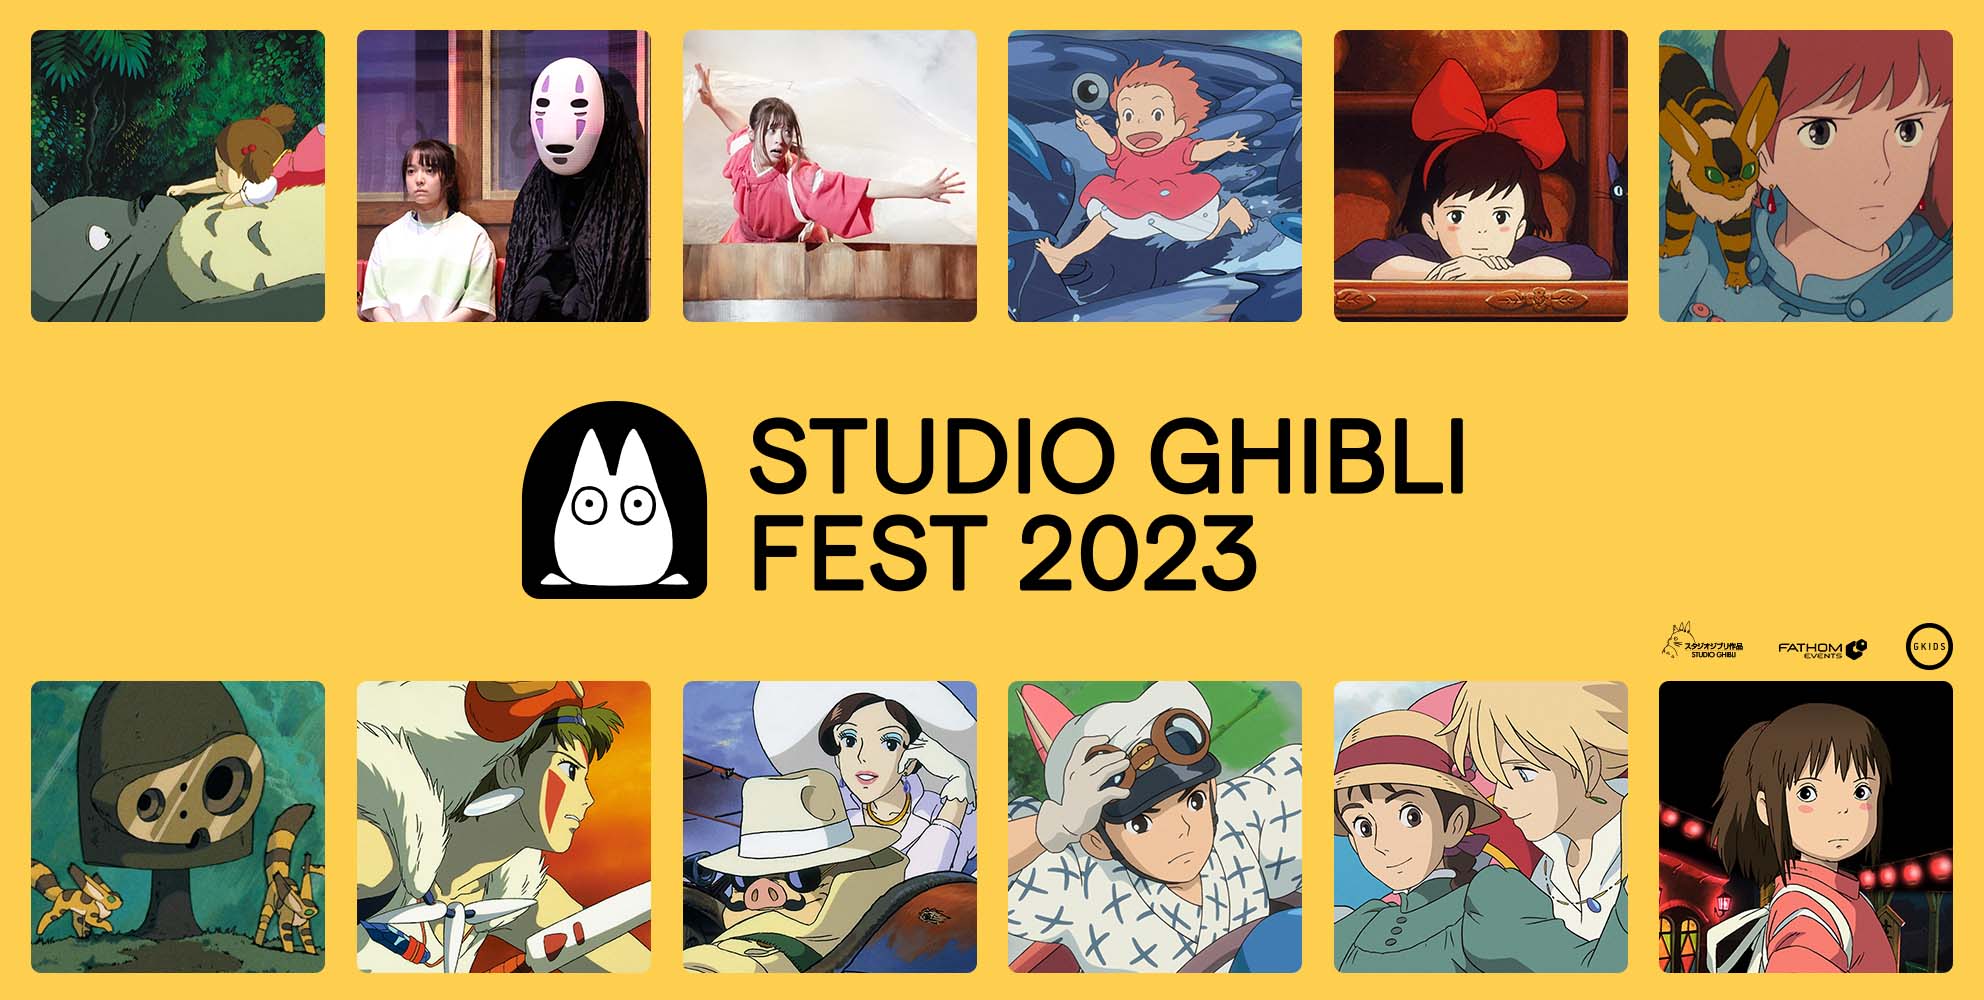 Part of Studio Ghibli Fest 2023